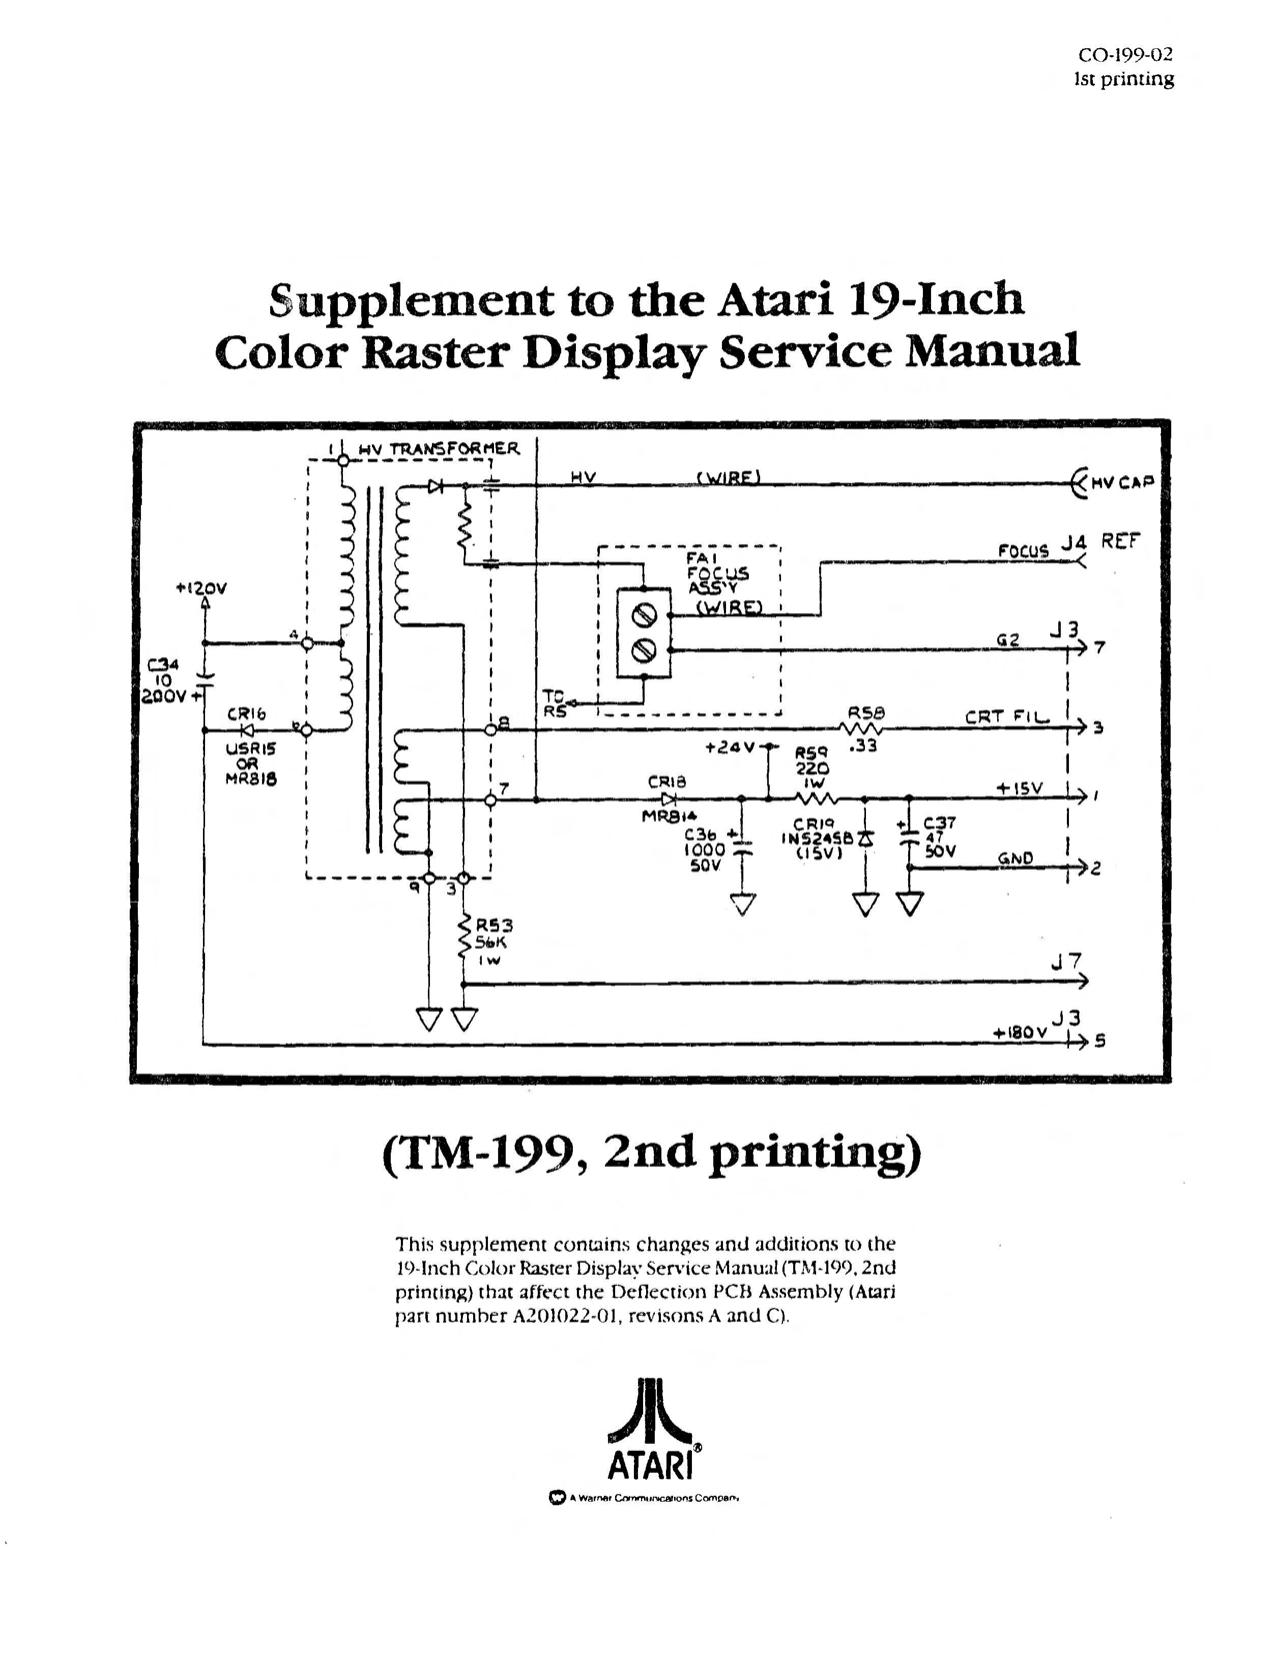 Atari Monitor CO-199-02 1st Pritning